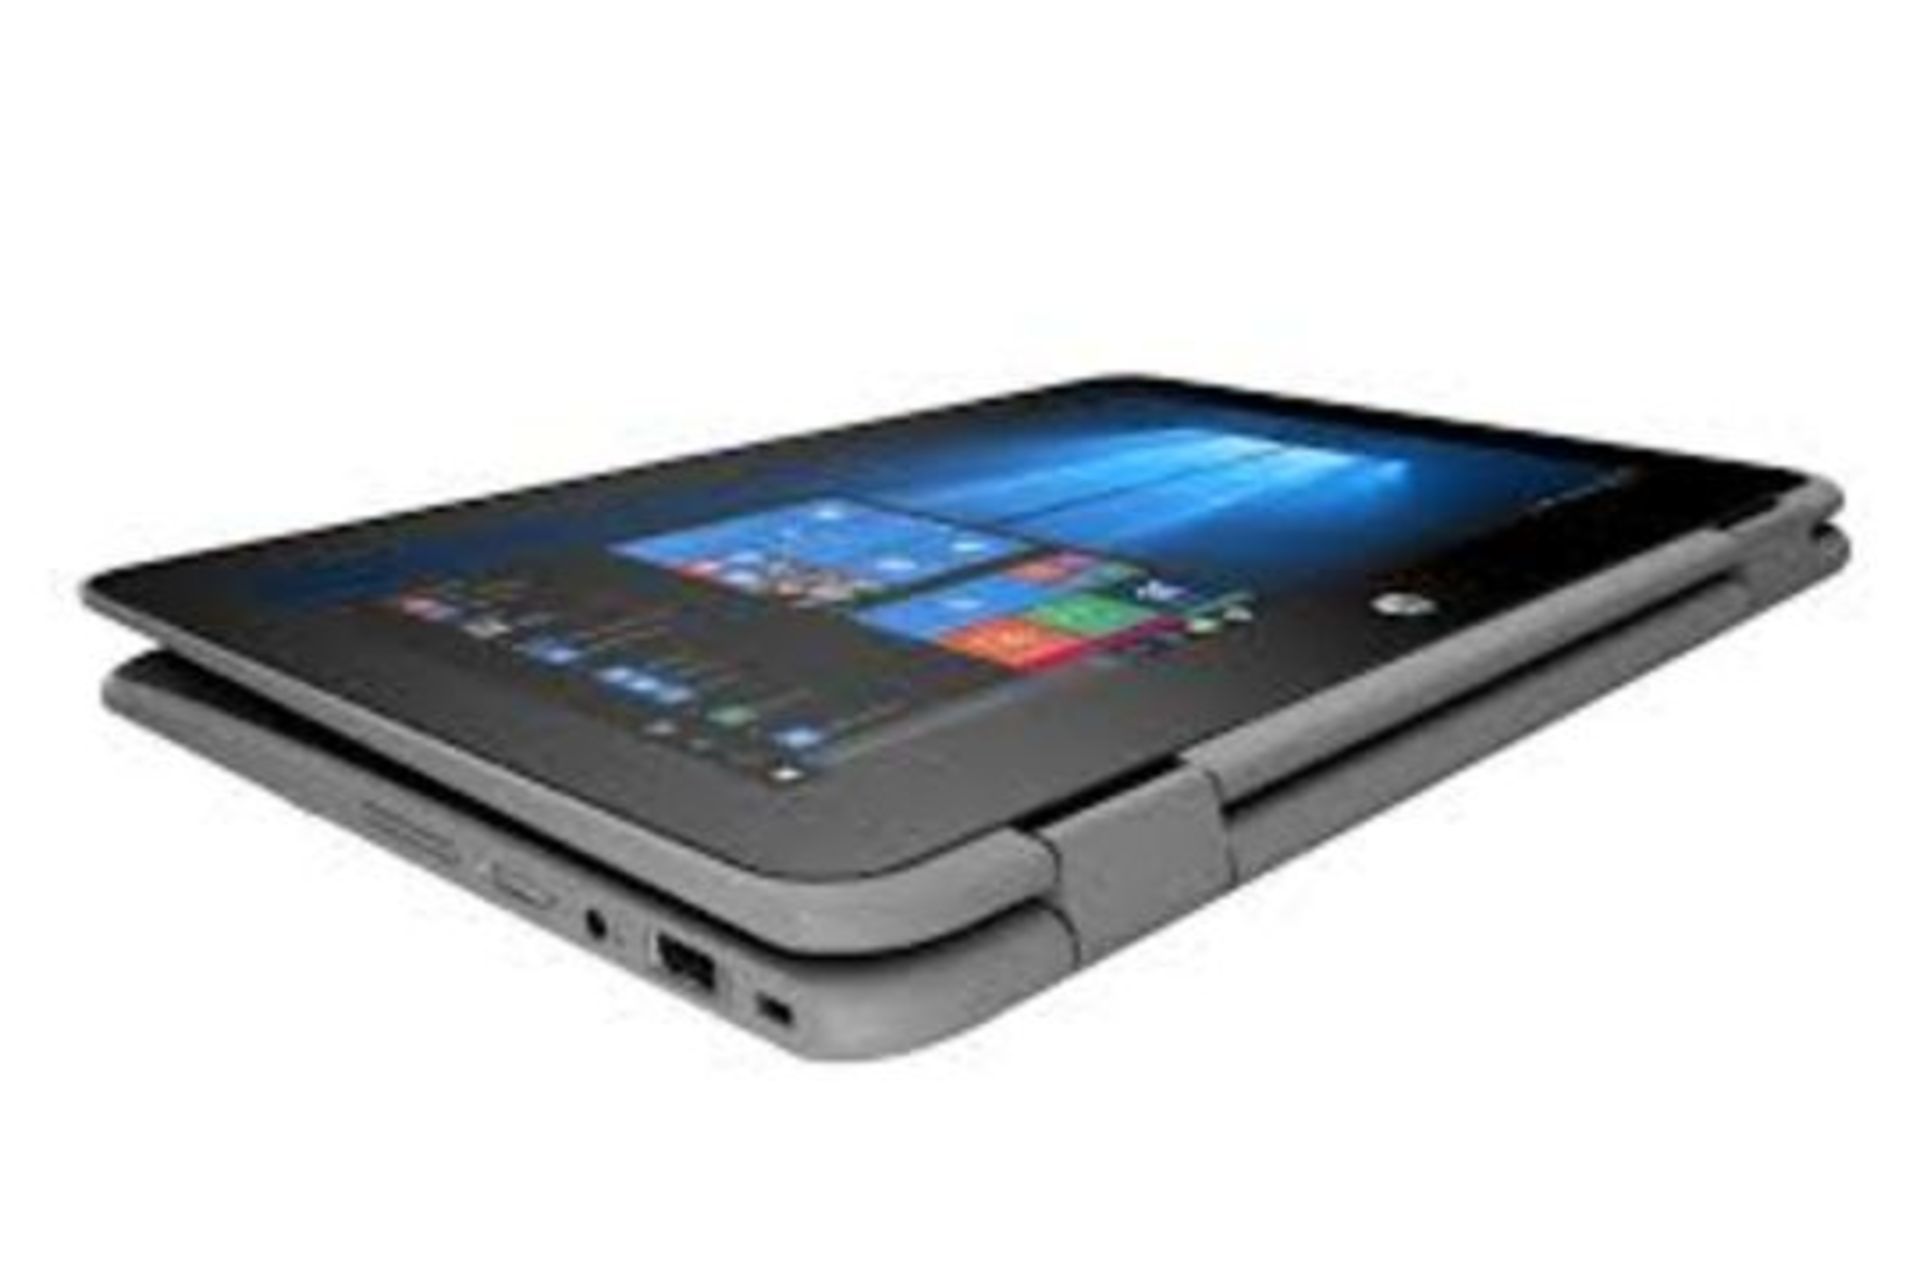 2 X HP ProBook x360 11 G1 EE 2 IN 1 Laptops (Pentium Quad Core/4 GB/128 GB SSD) RRP £450 EACH. - Image 2 of 3